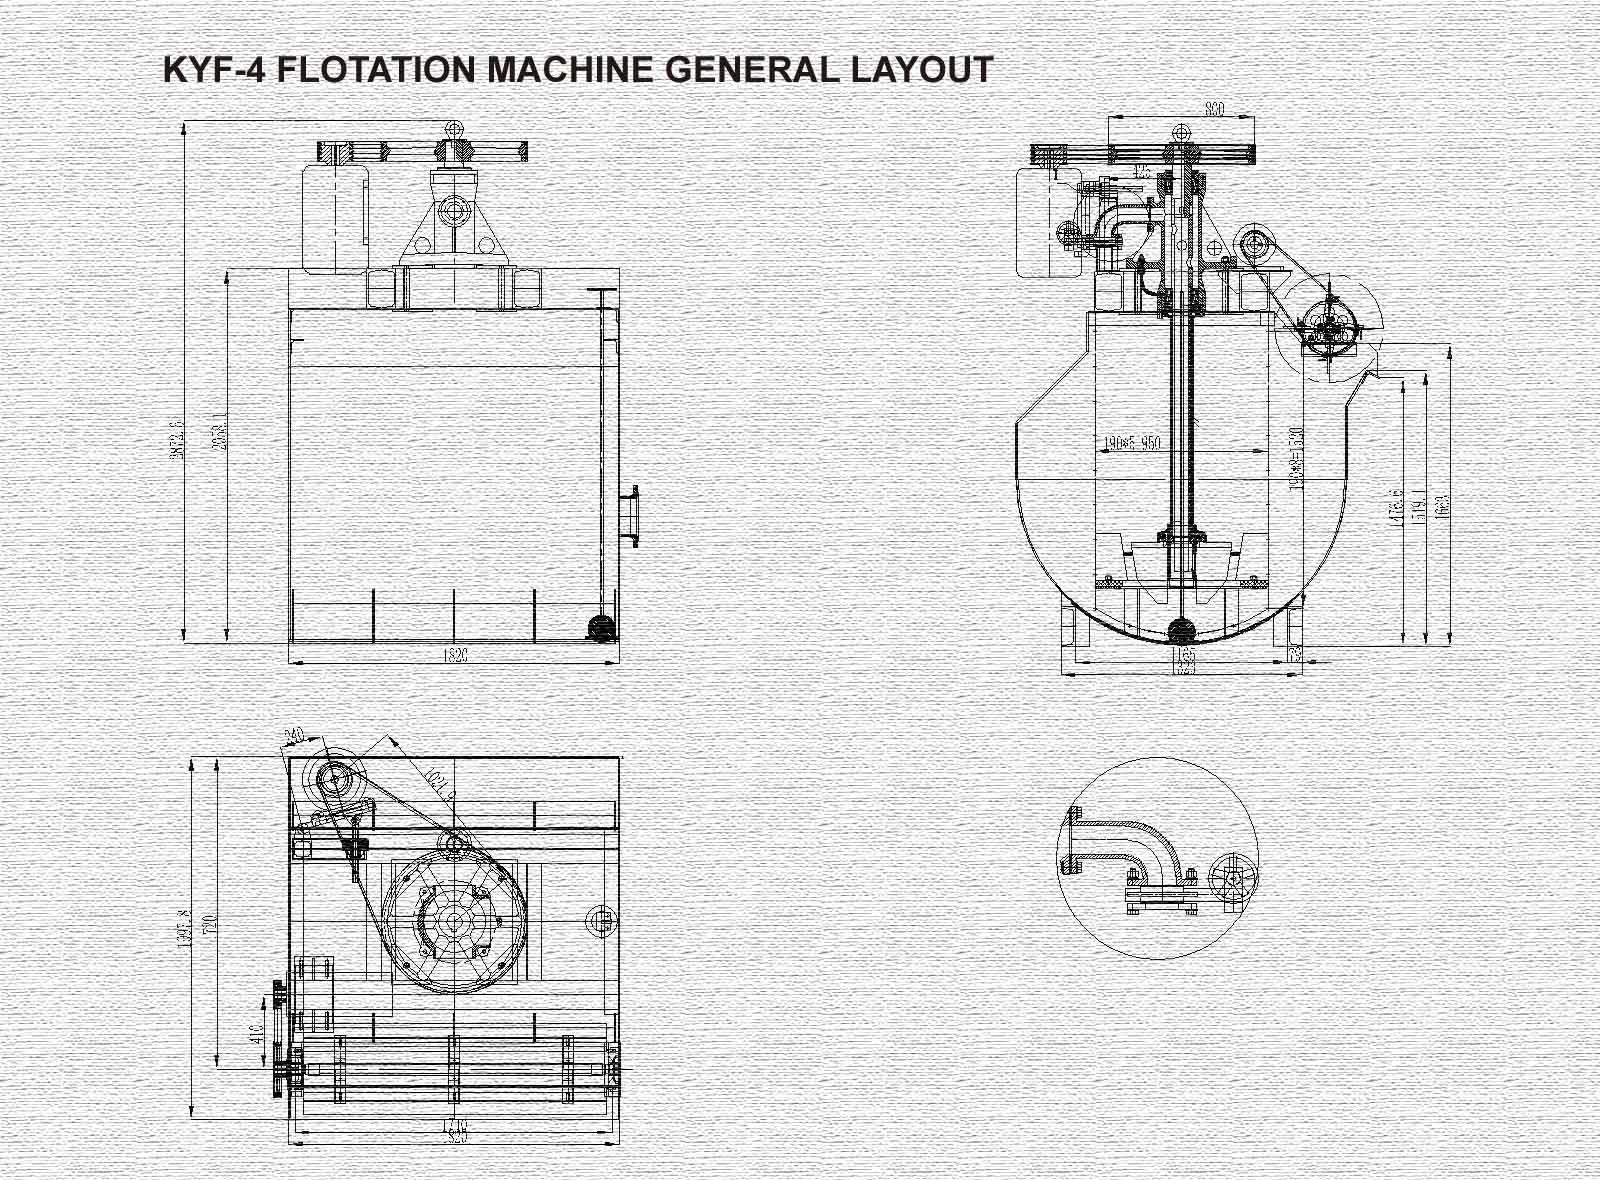 KYF flotation machine